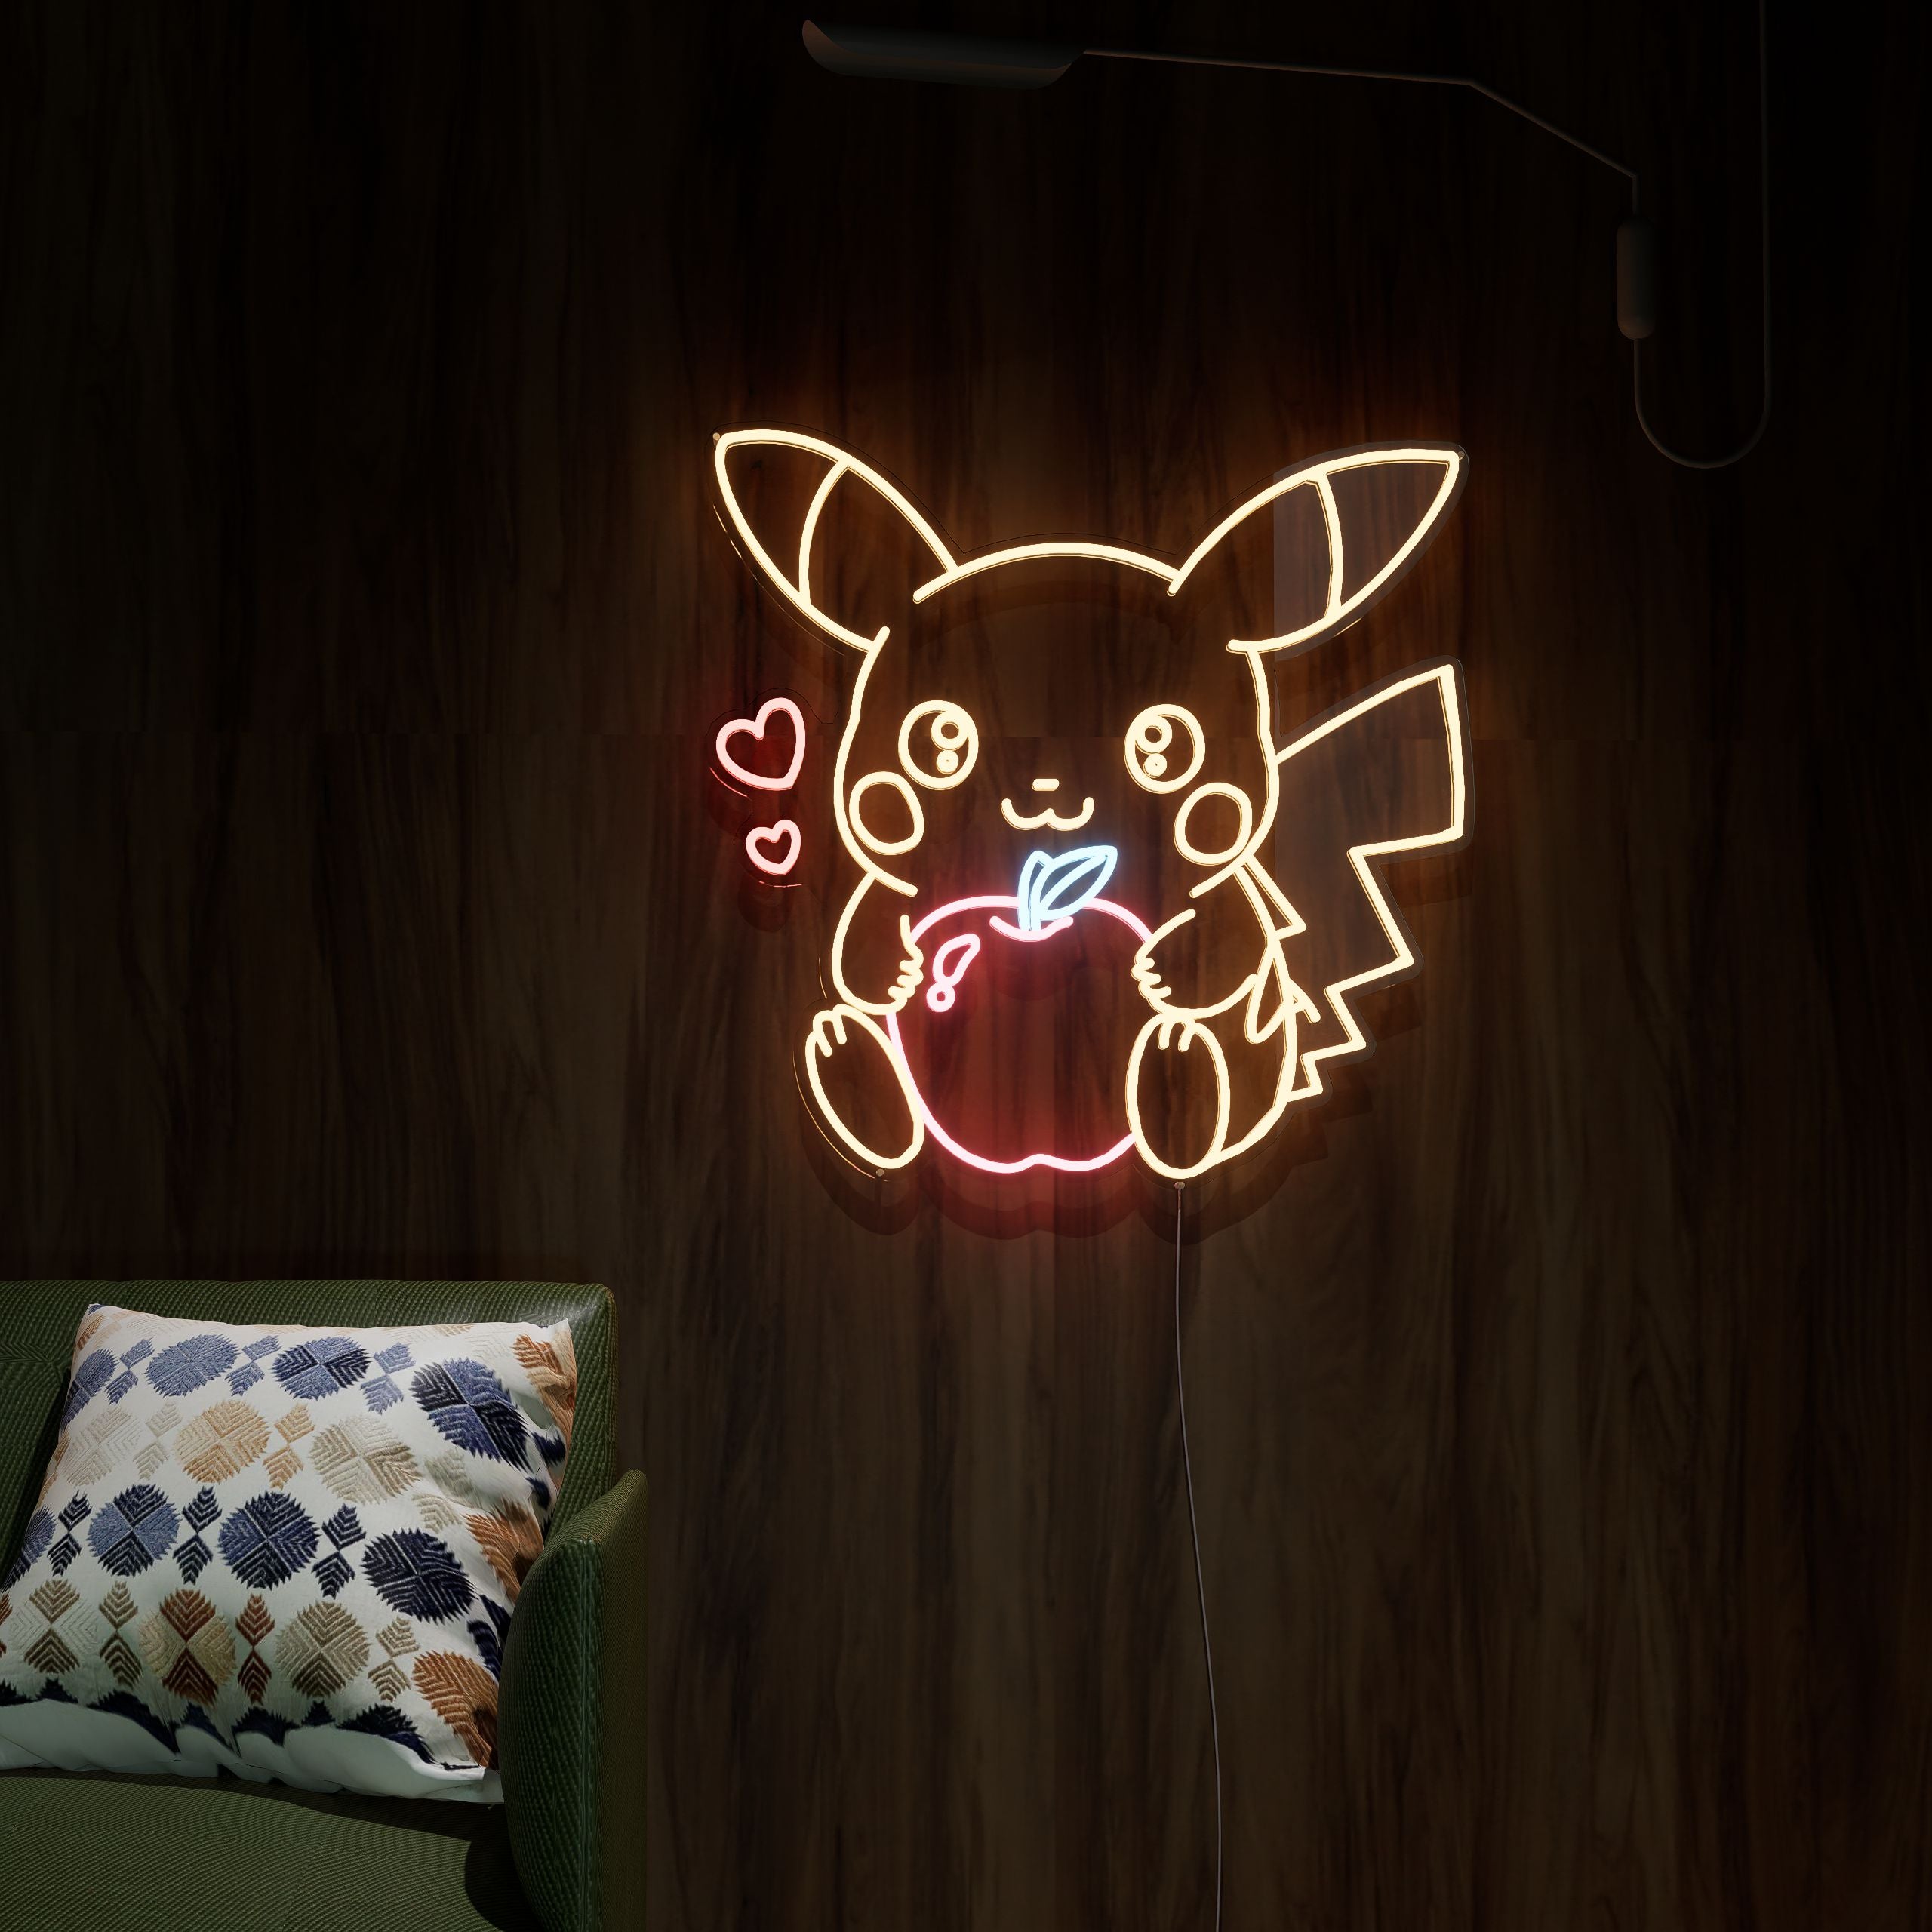 pikachu-pokemon-neon-sign-3-Neon-sign-Lite